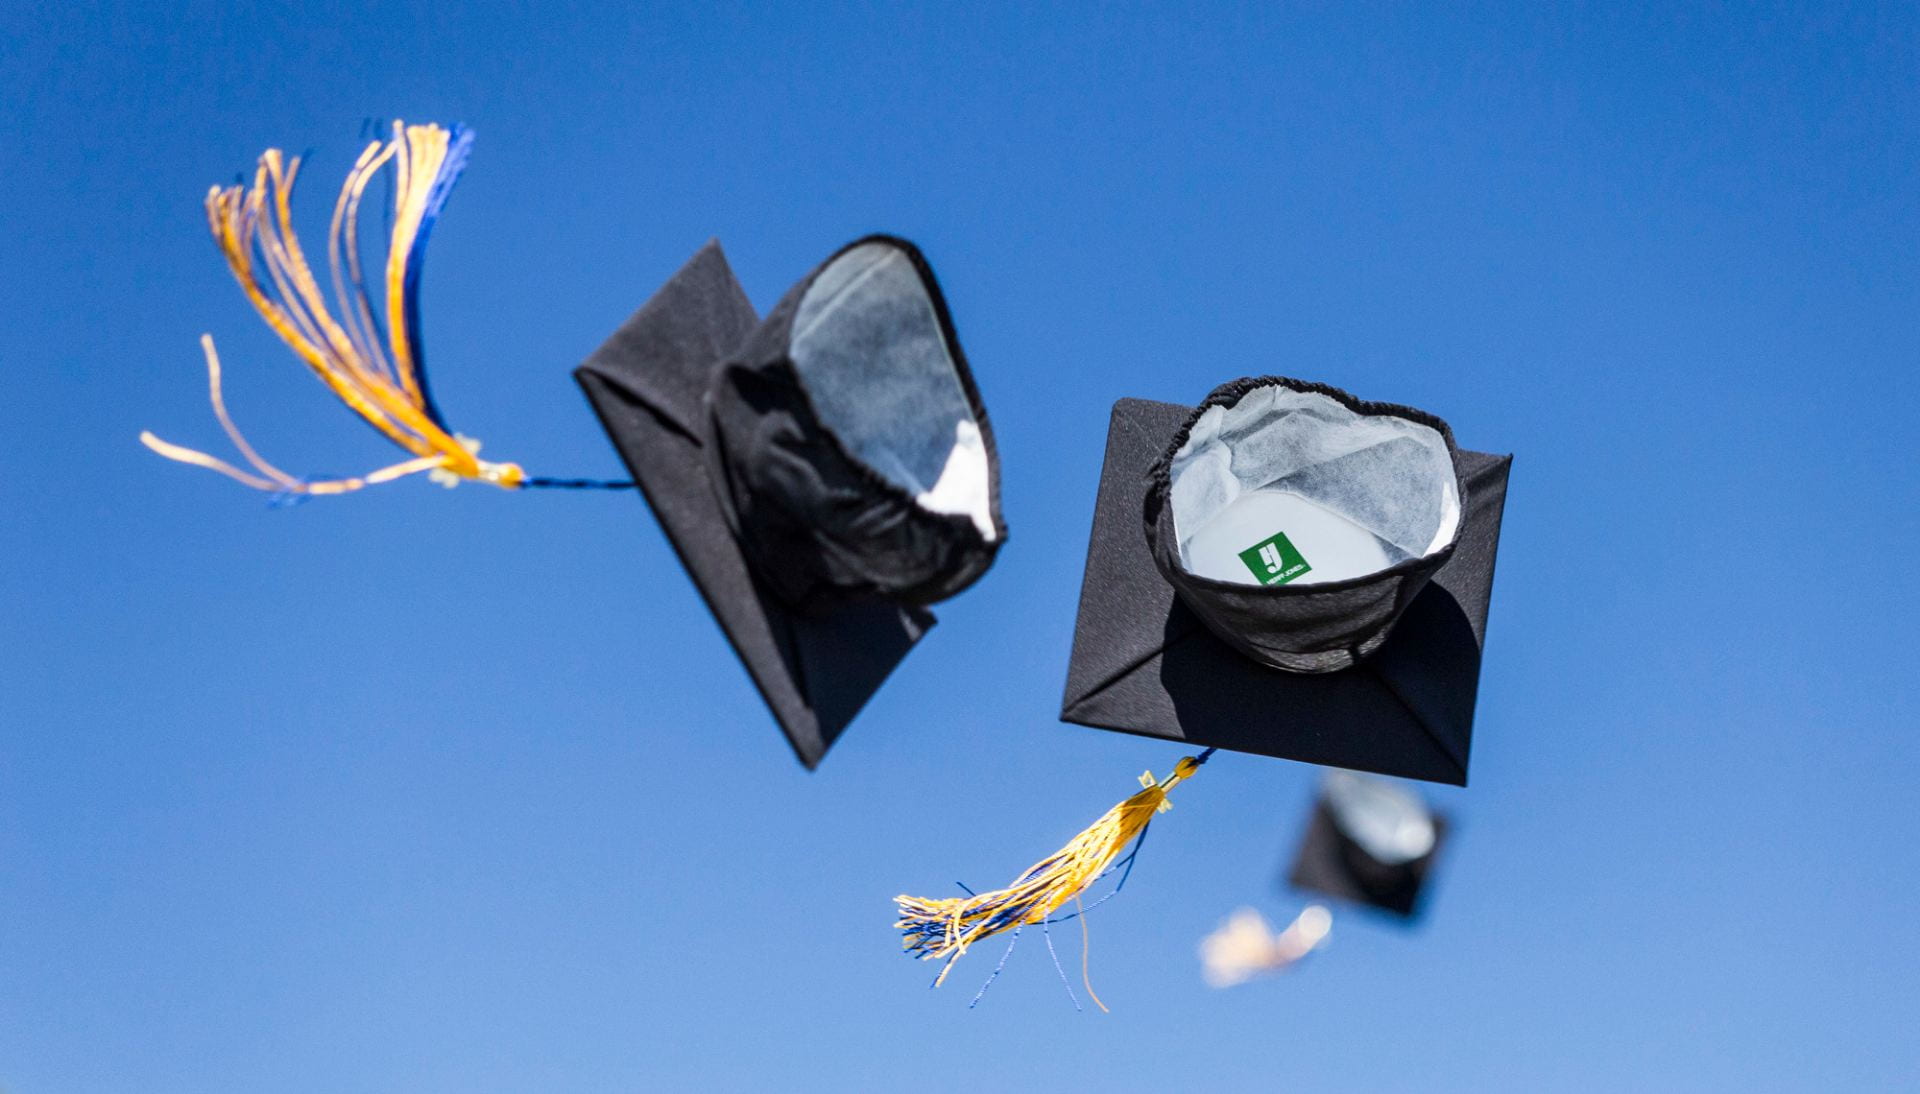 graduation caps flying through the air